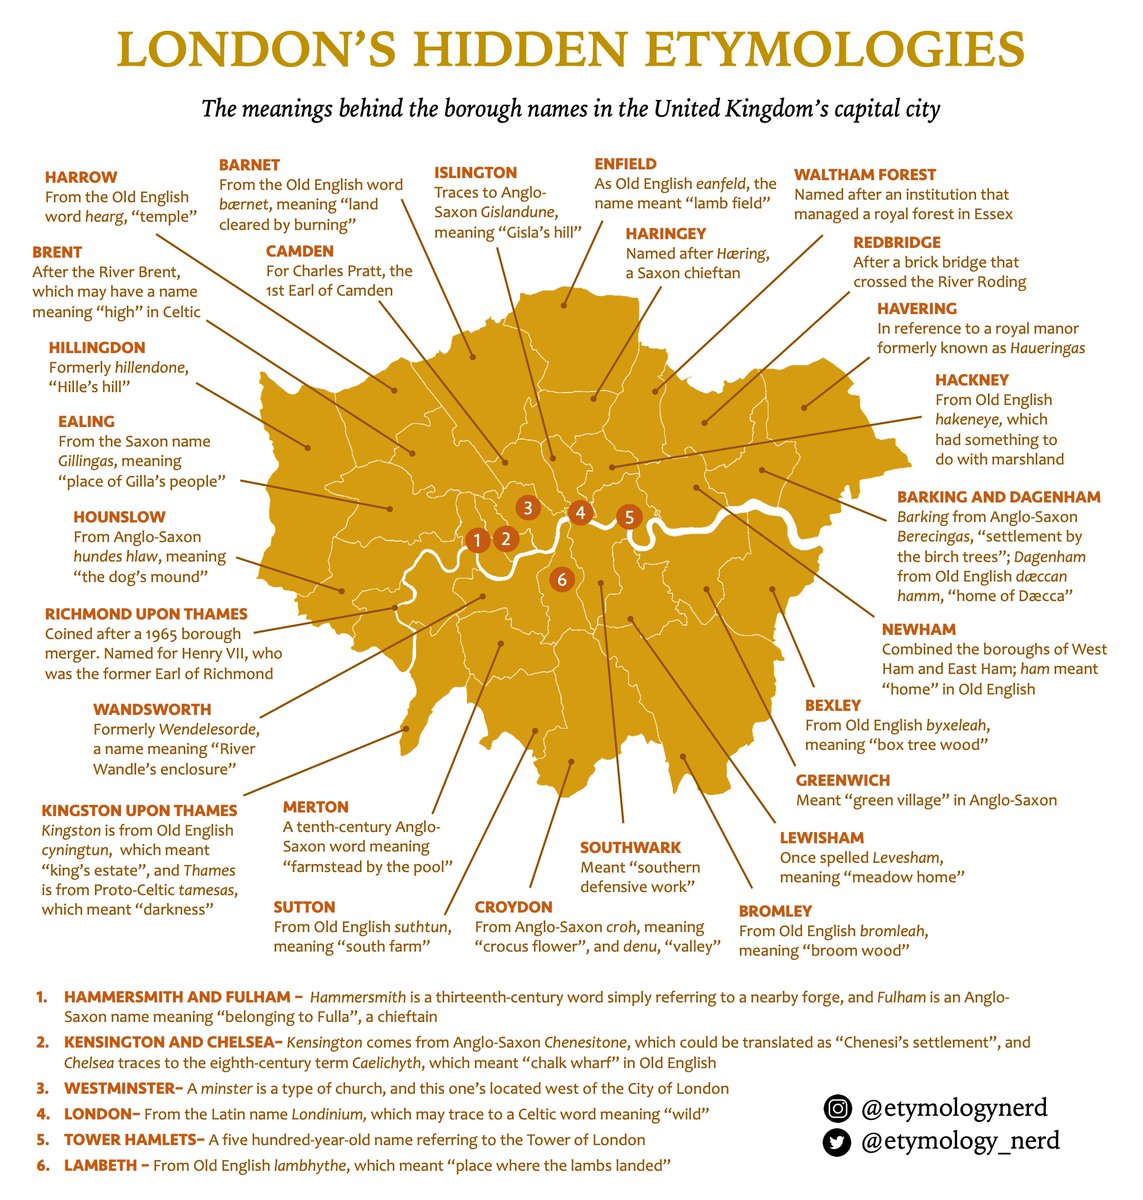 London's Hidden Etymologies by @etymology_nerd redd.it/clx3f2 #MapPorn